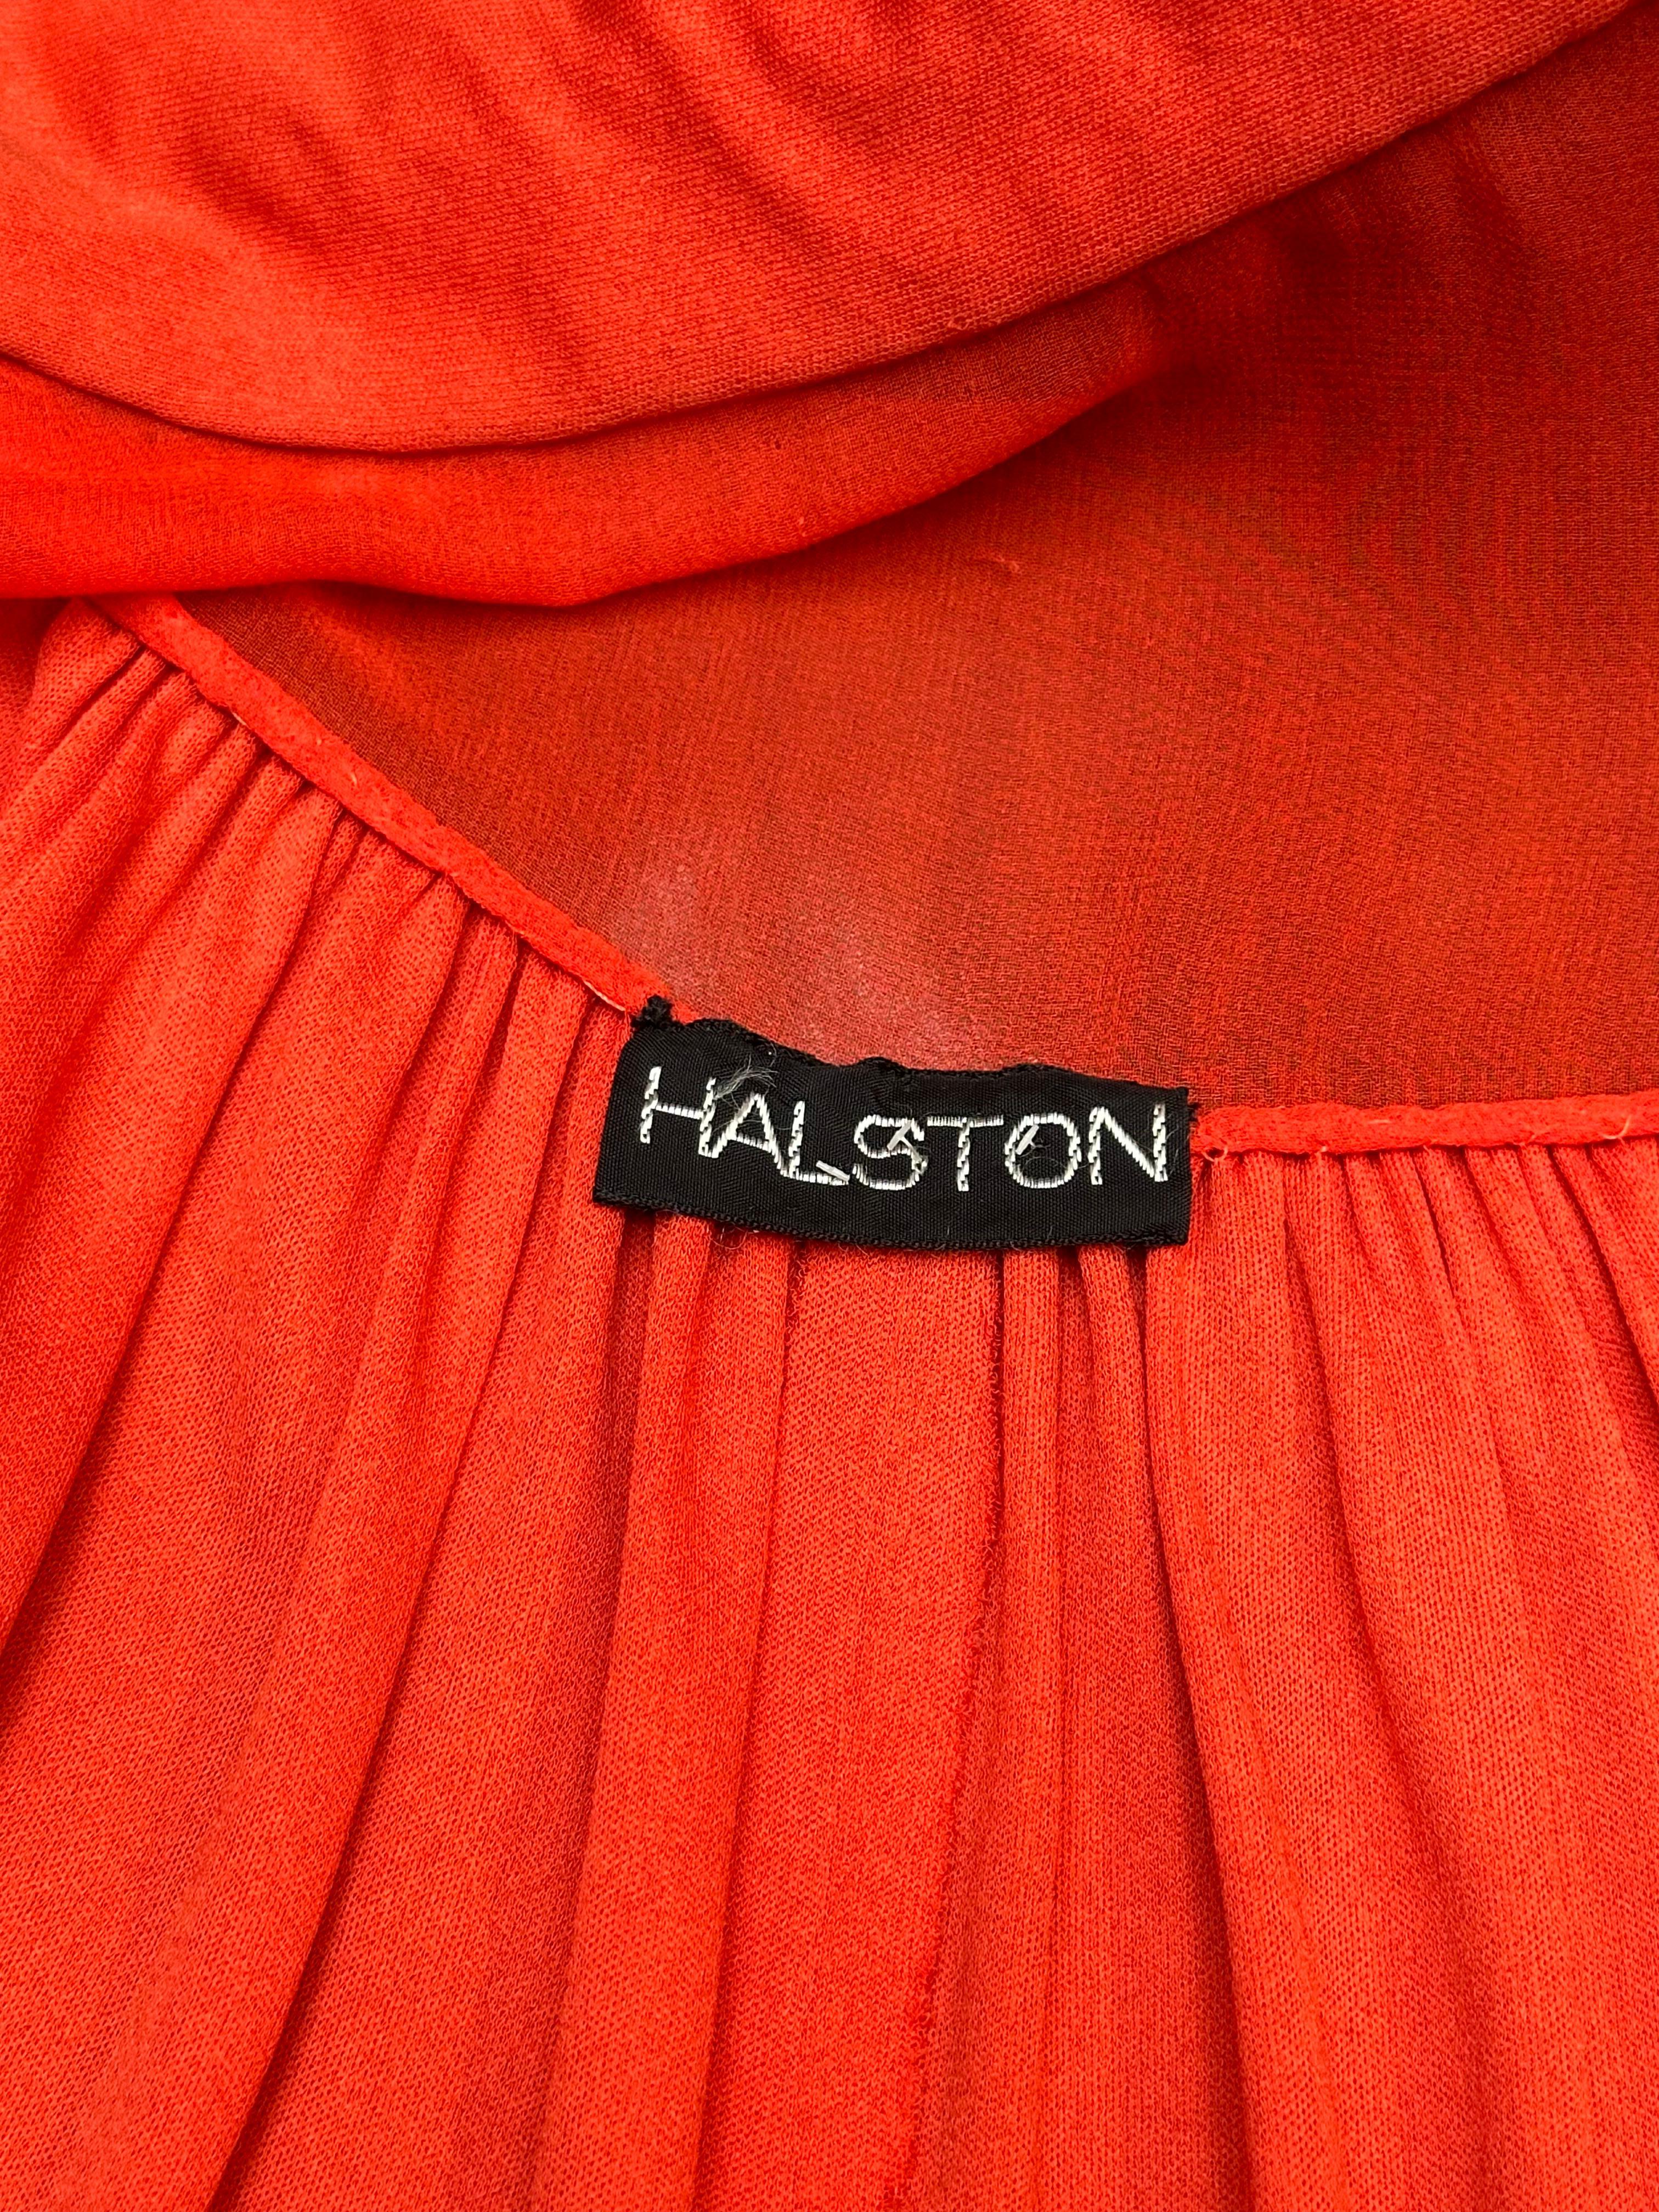 Women's c. 1970s HALSTON Orange Matte Jersey Halter Dress with Matching Jacket For Sale